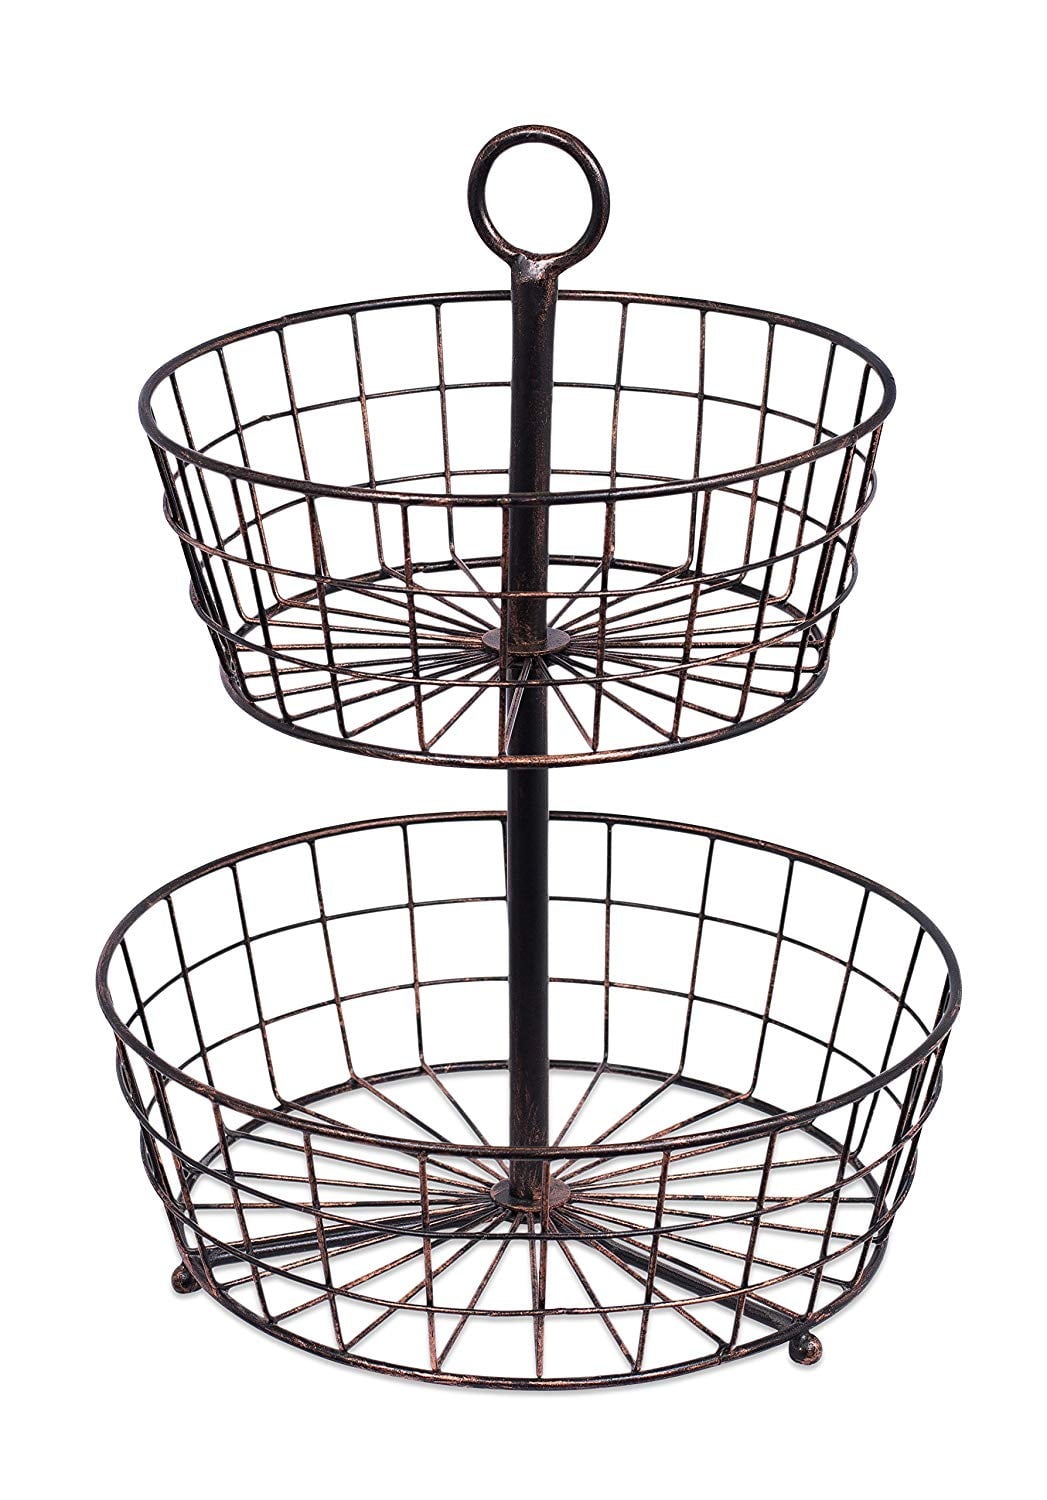 CodYinFI 3 Tier Wire Fruit Basket Bowl - Round Metal Standing Storage  Baskets - Vegetable Garlic Caddy Stand for Kitchen Counter - Freestanding  Rustic